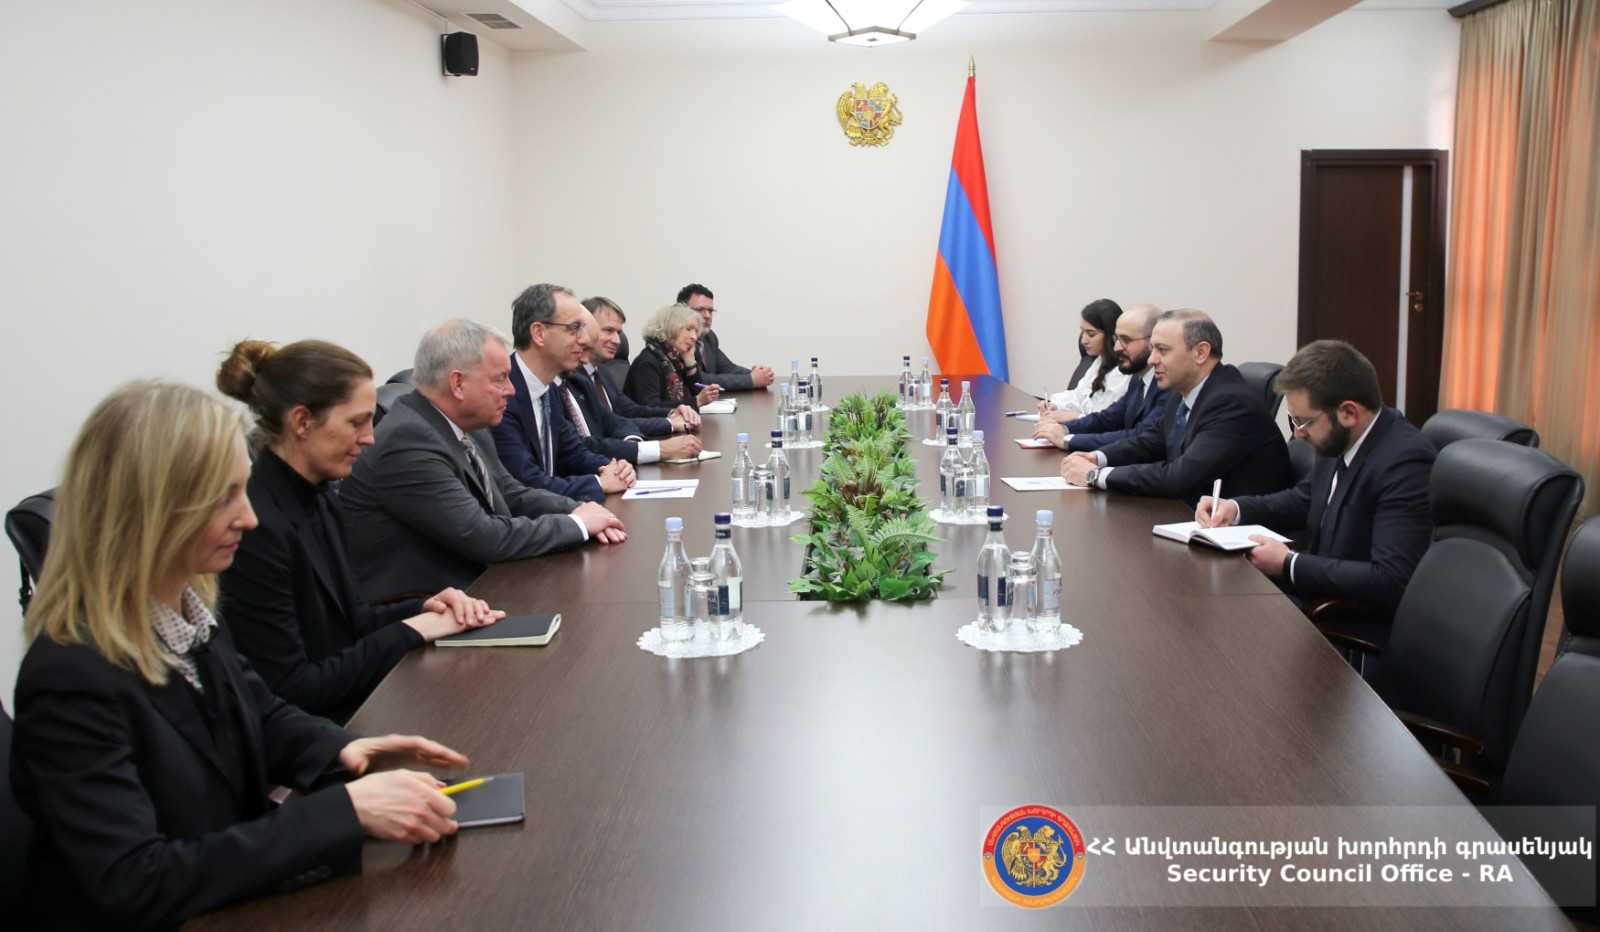 Commander Stefano Tomat presented EU mission’s work in Armenia